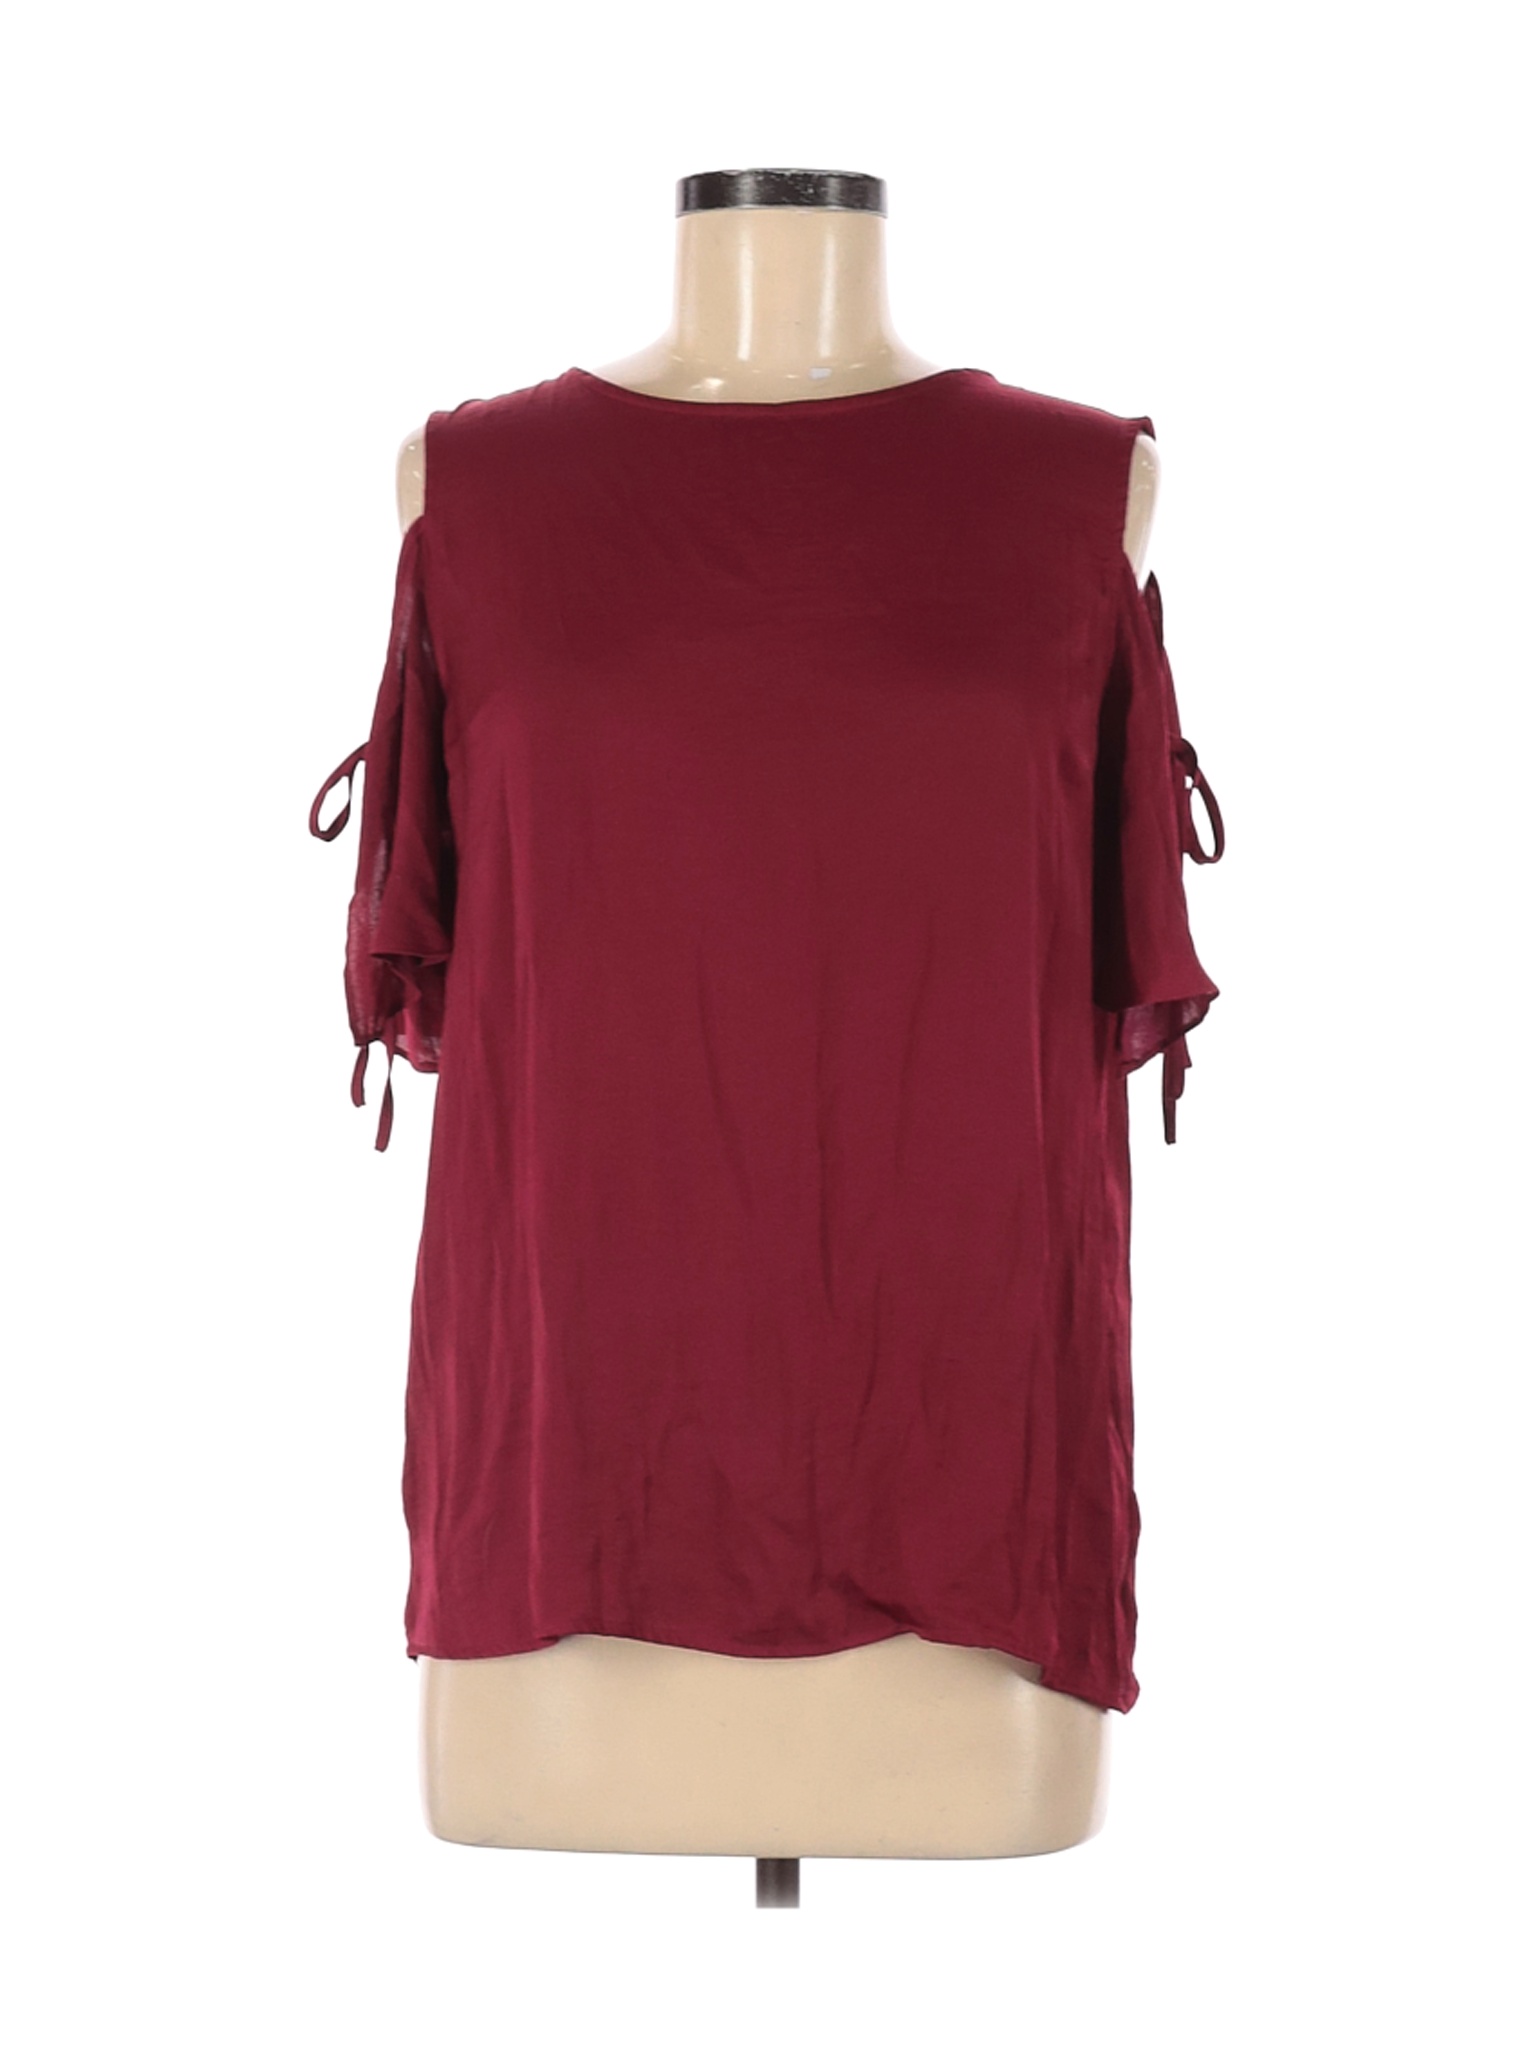 Who What Wear Women Red Short Sleeve Blouse M | eBay